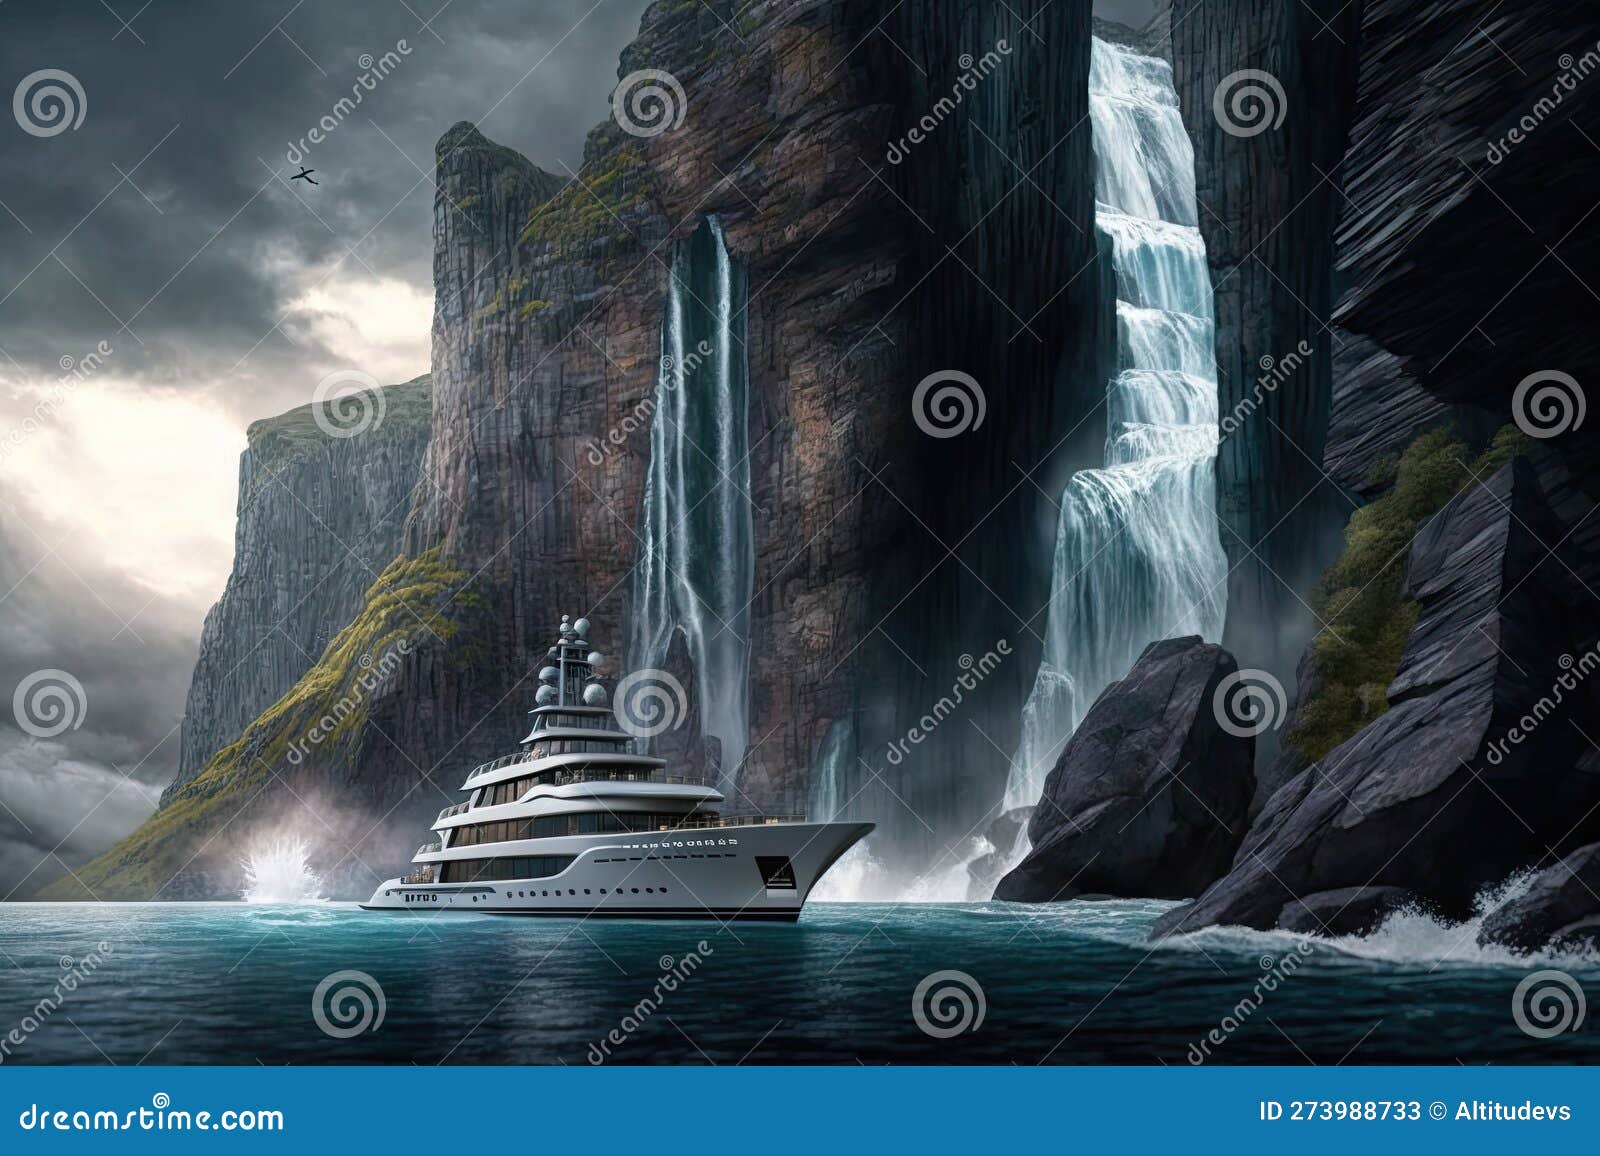 cliff illig yacht